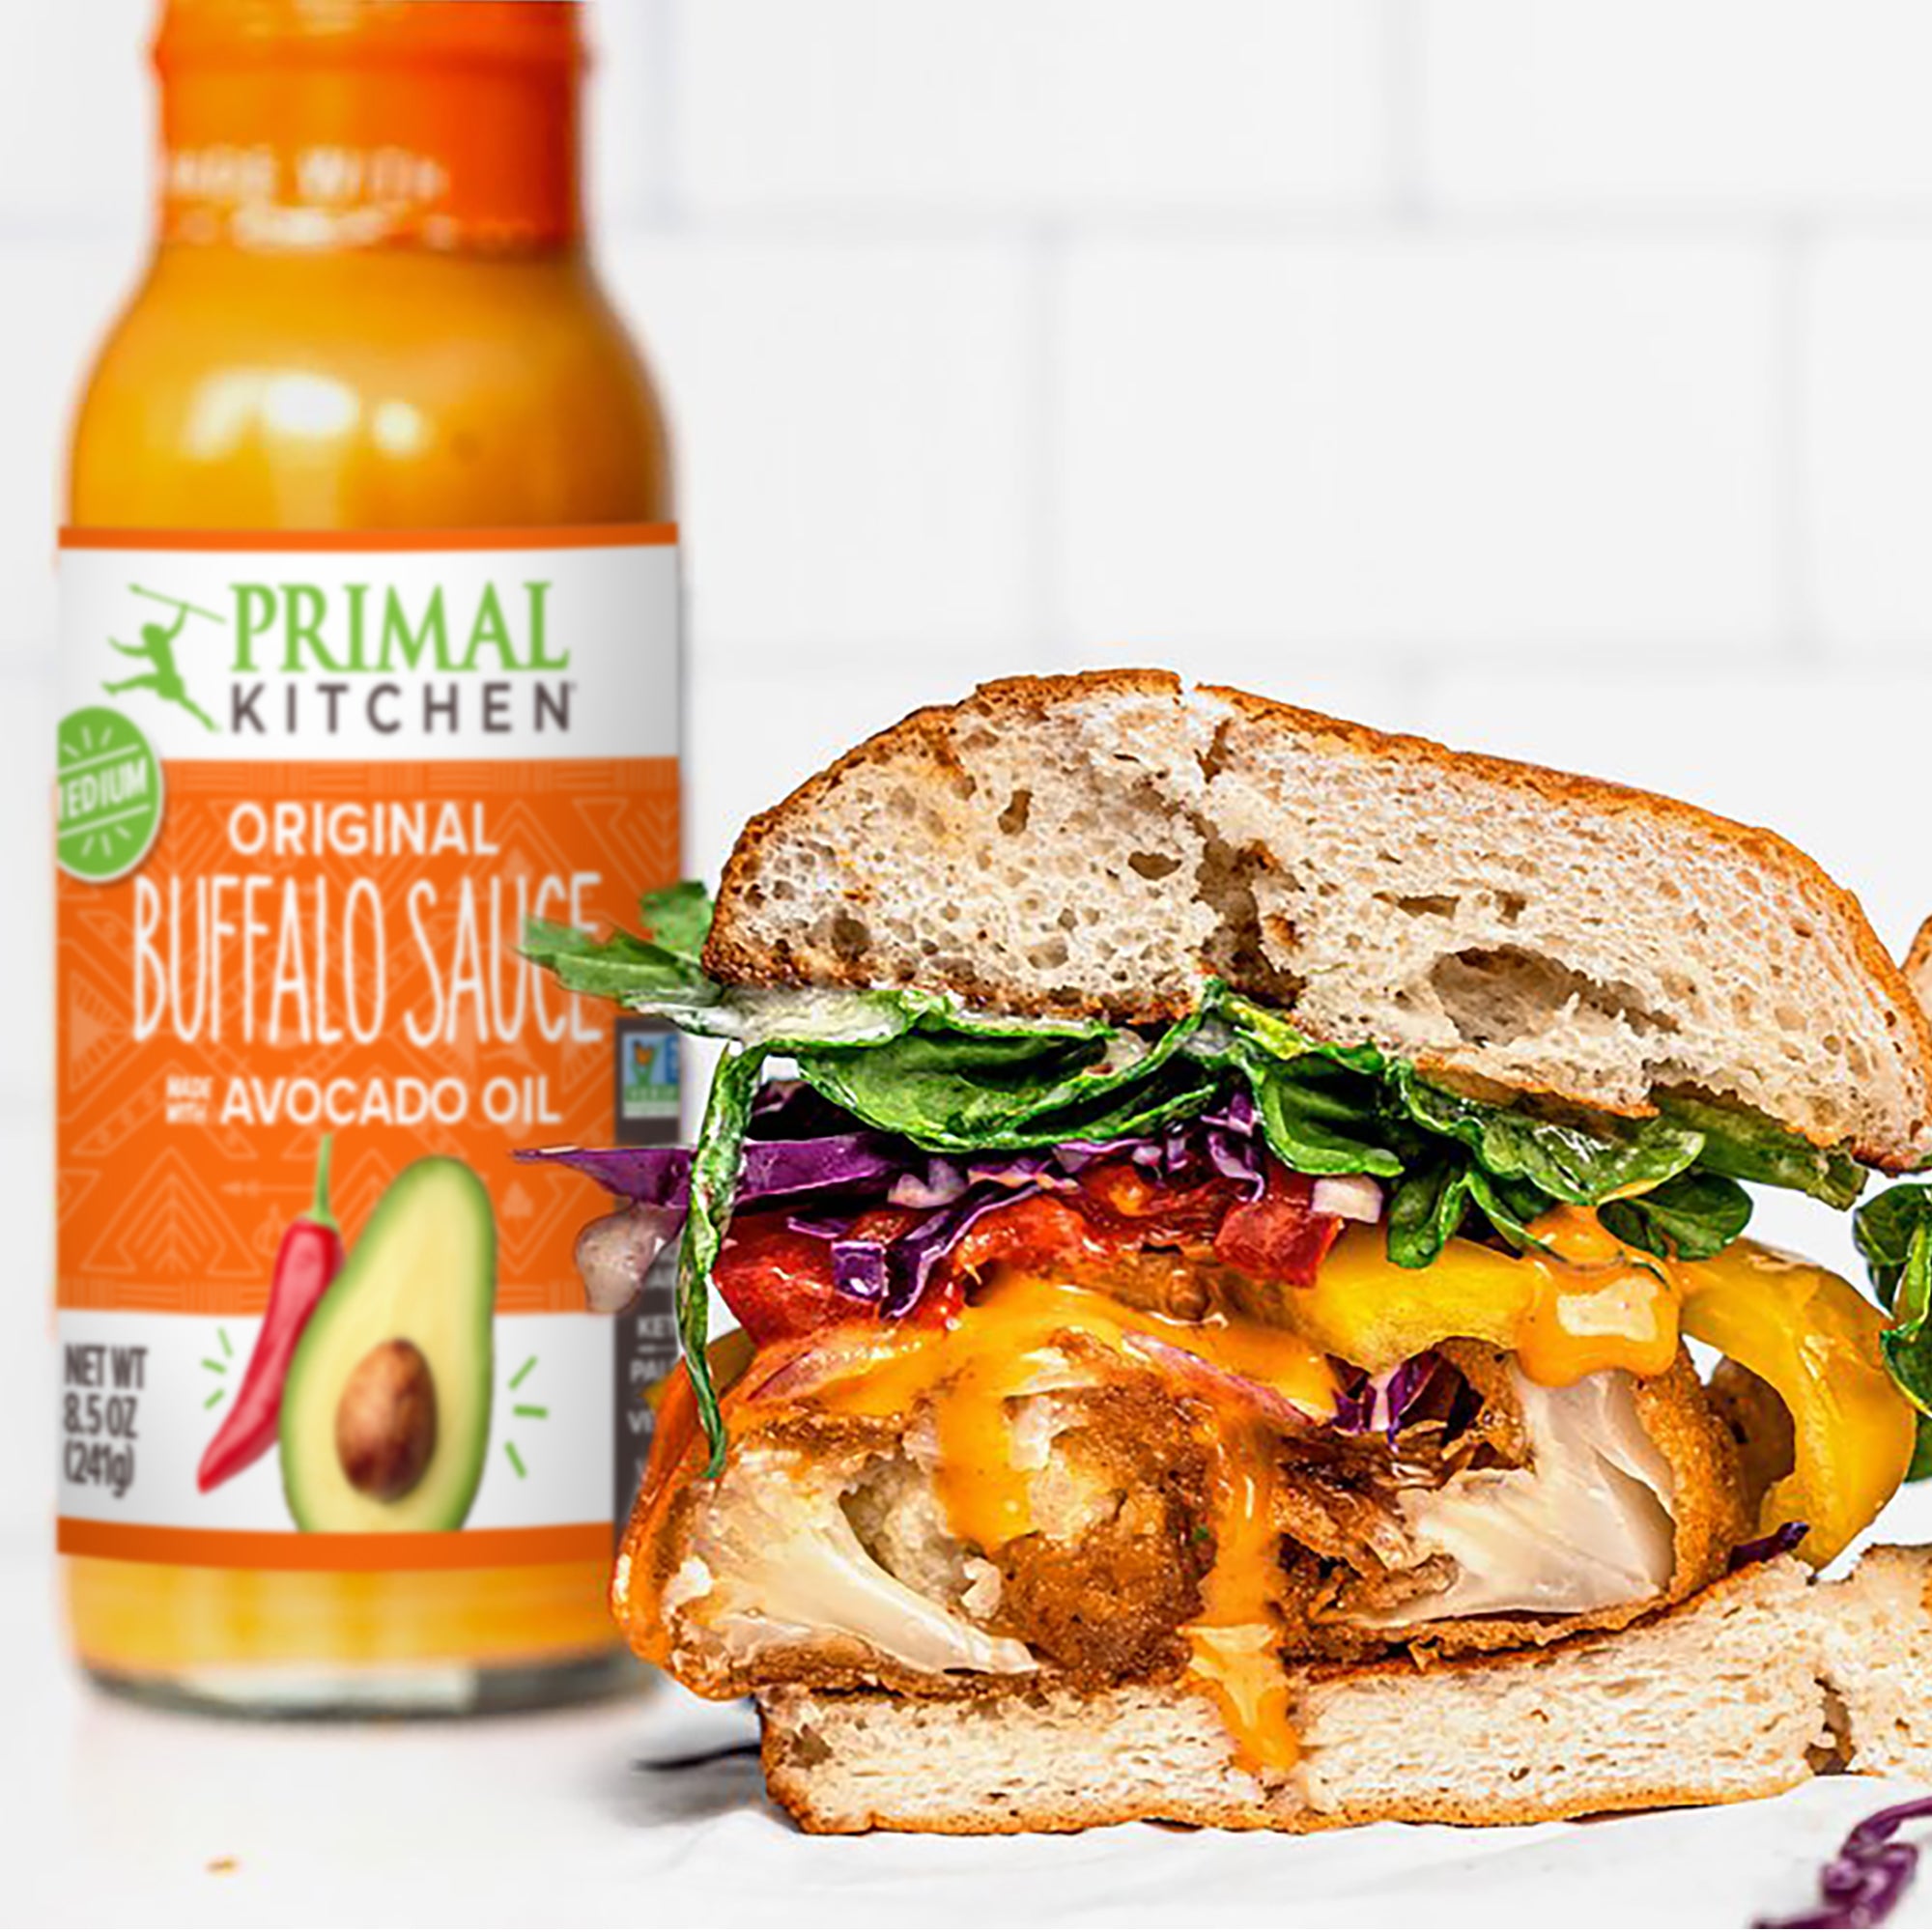 Bottle of Primal Kitchen Original Buffalo Sauce made with Avocado Oil next to a Buffalo Chicken Sandwich